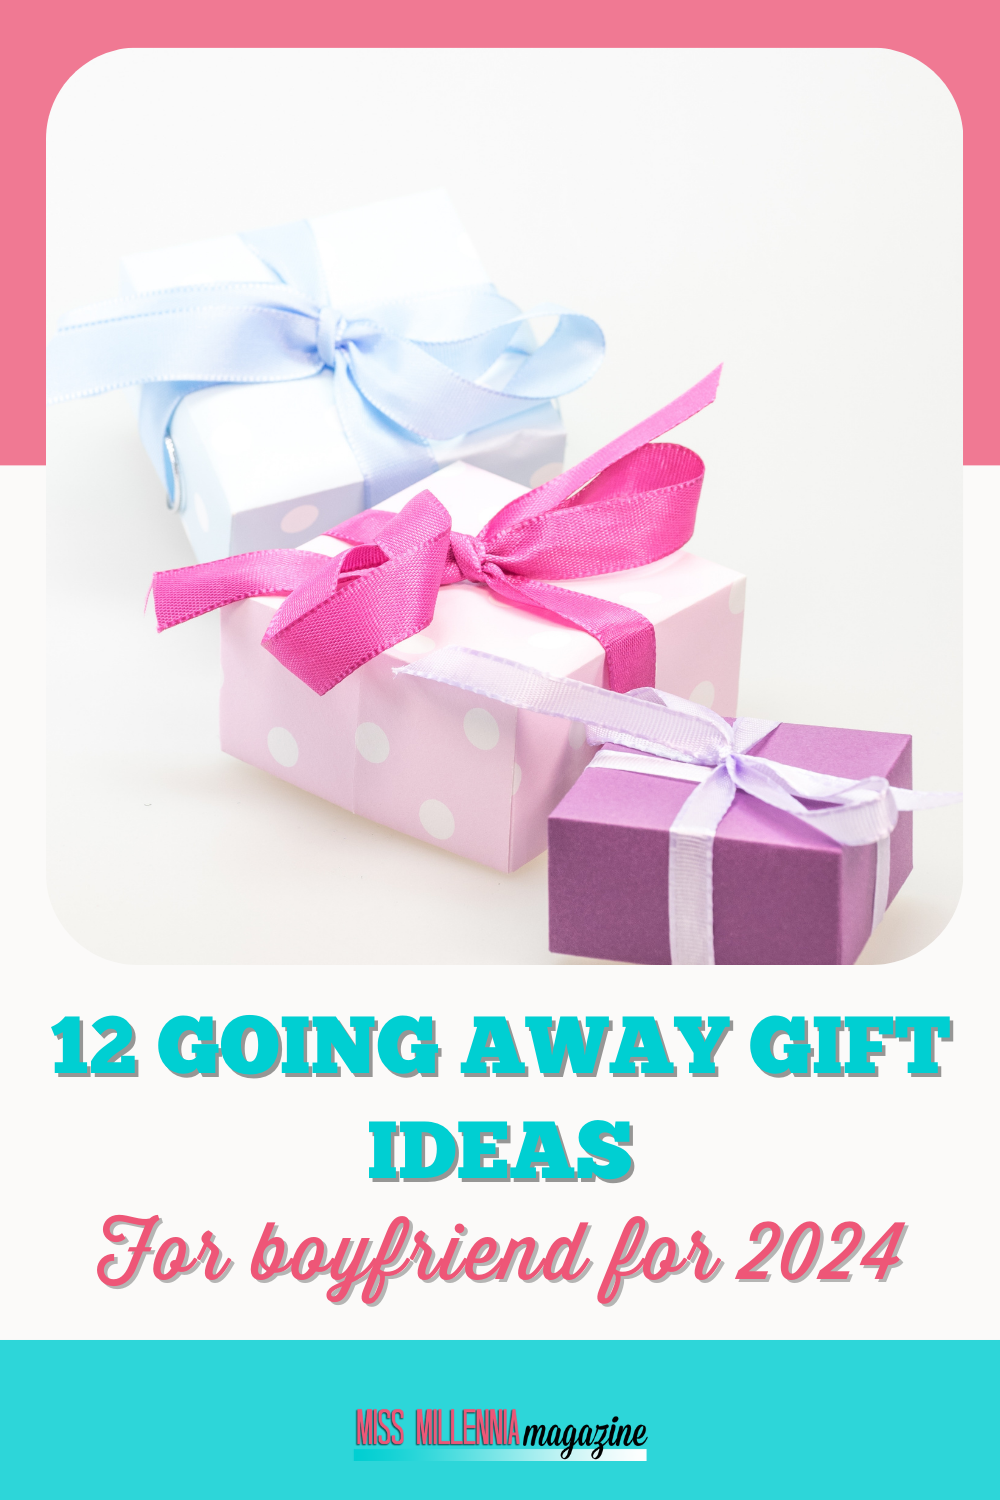 12 Going Away Gift Ideas for Boyfriend for 2024